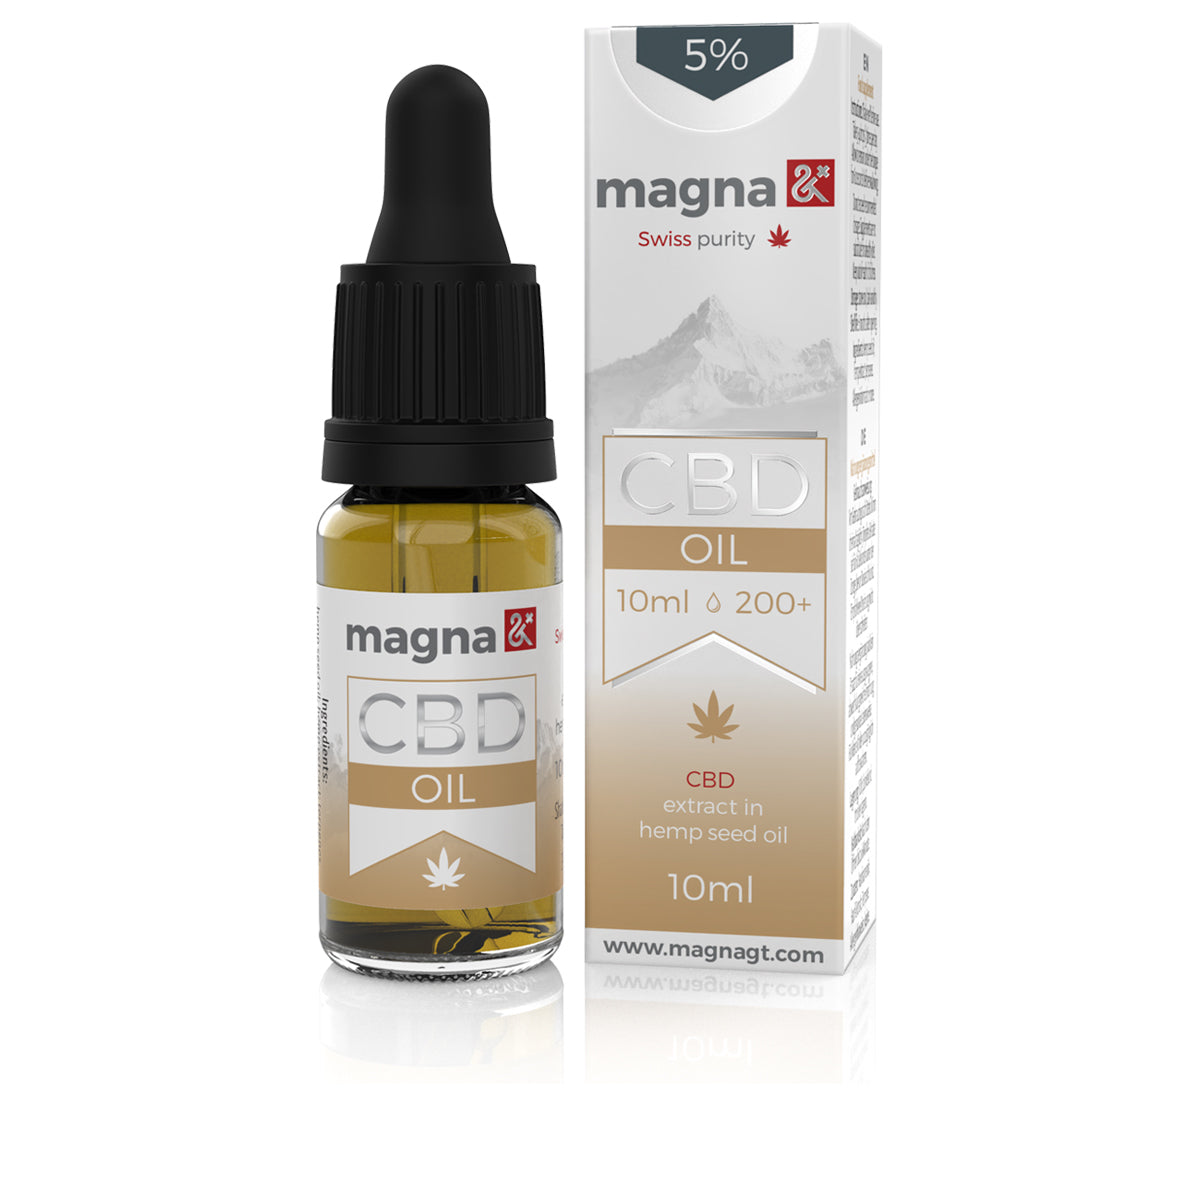 Magna G&T 5% CBD Oil 500mg | 10ml | In hemp seed oil